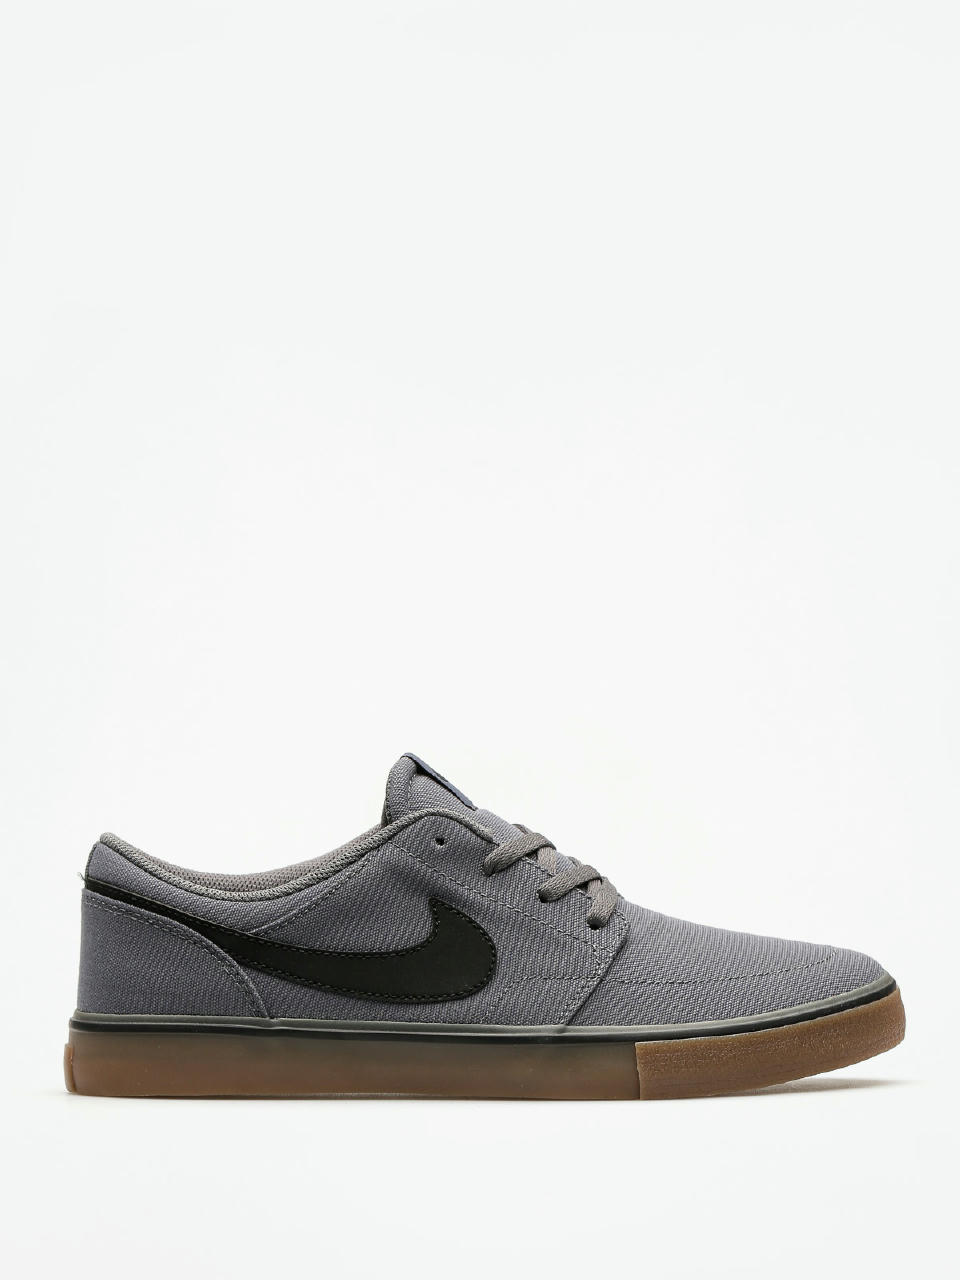 SB Shoes Sb (dark grey/black gum light brown)